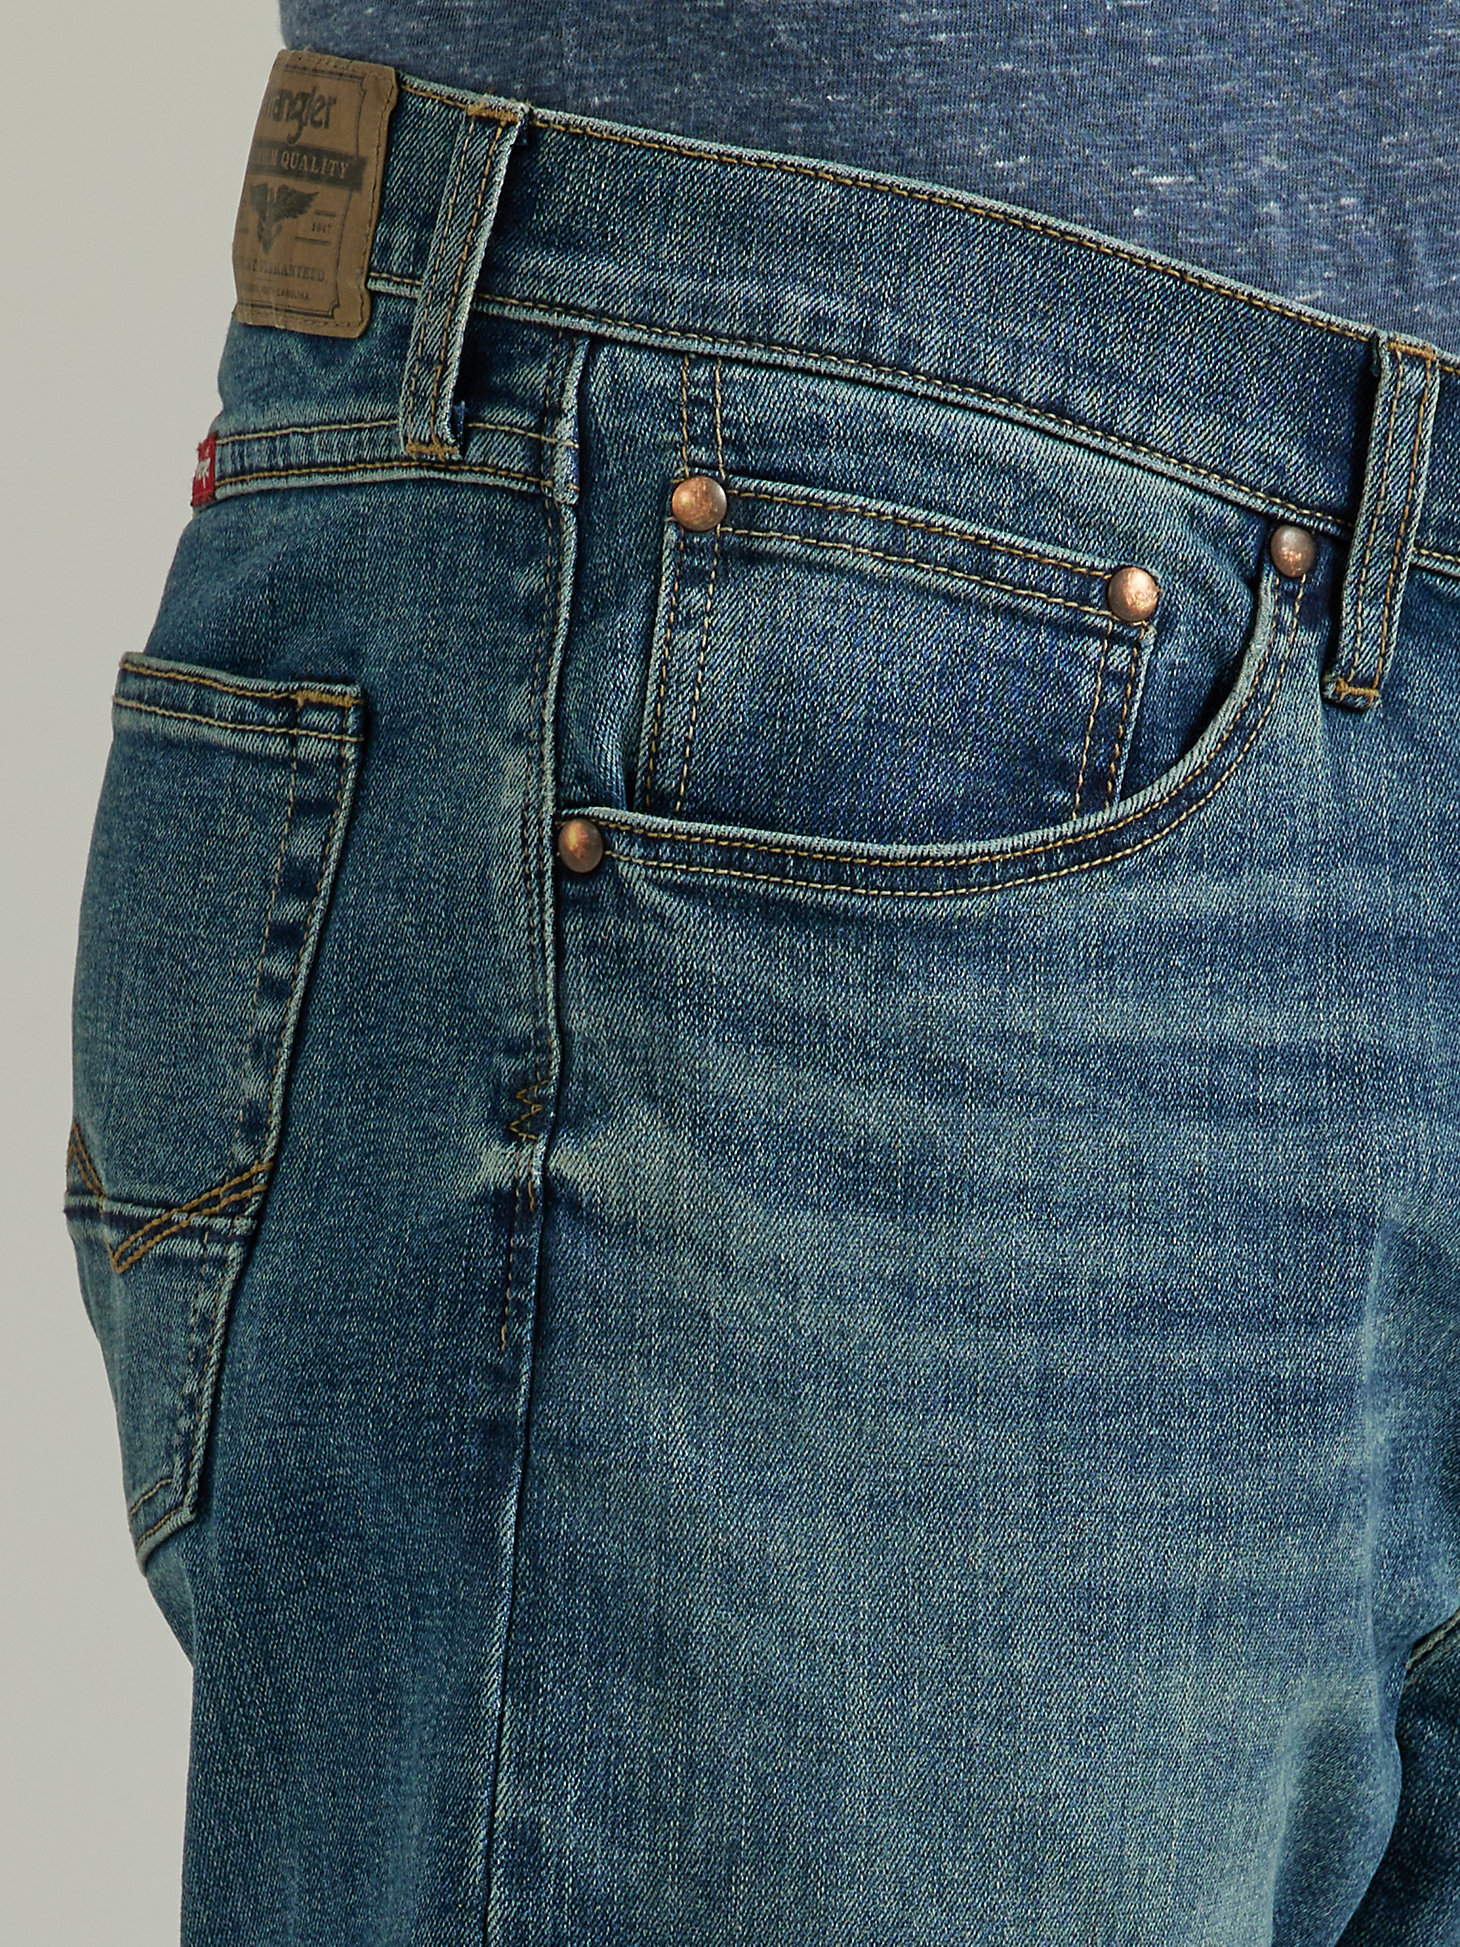 Wrangler® Men's Five Star Premium Flex Relaxed Fit Bootcut Jean in Summit alternative view 5